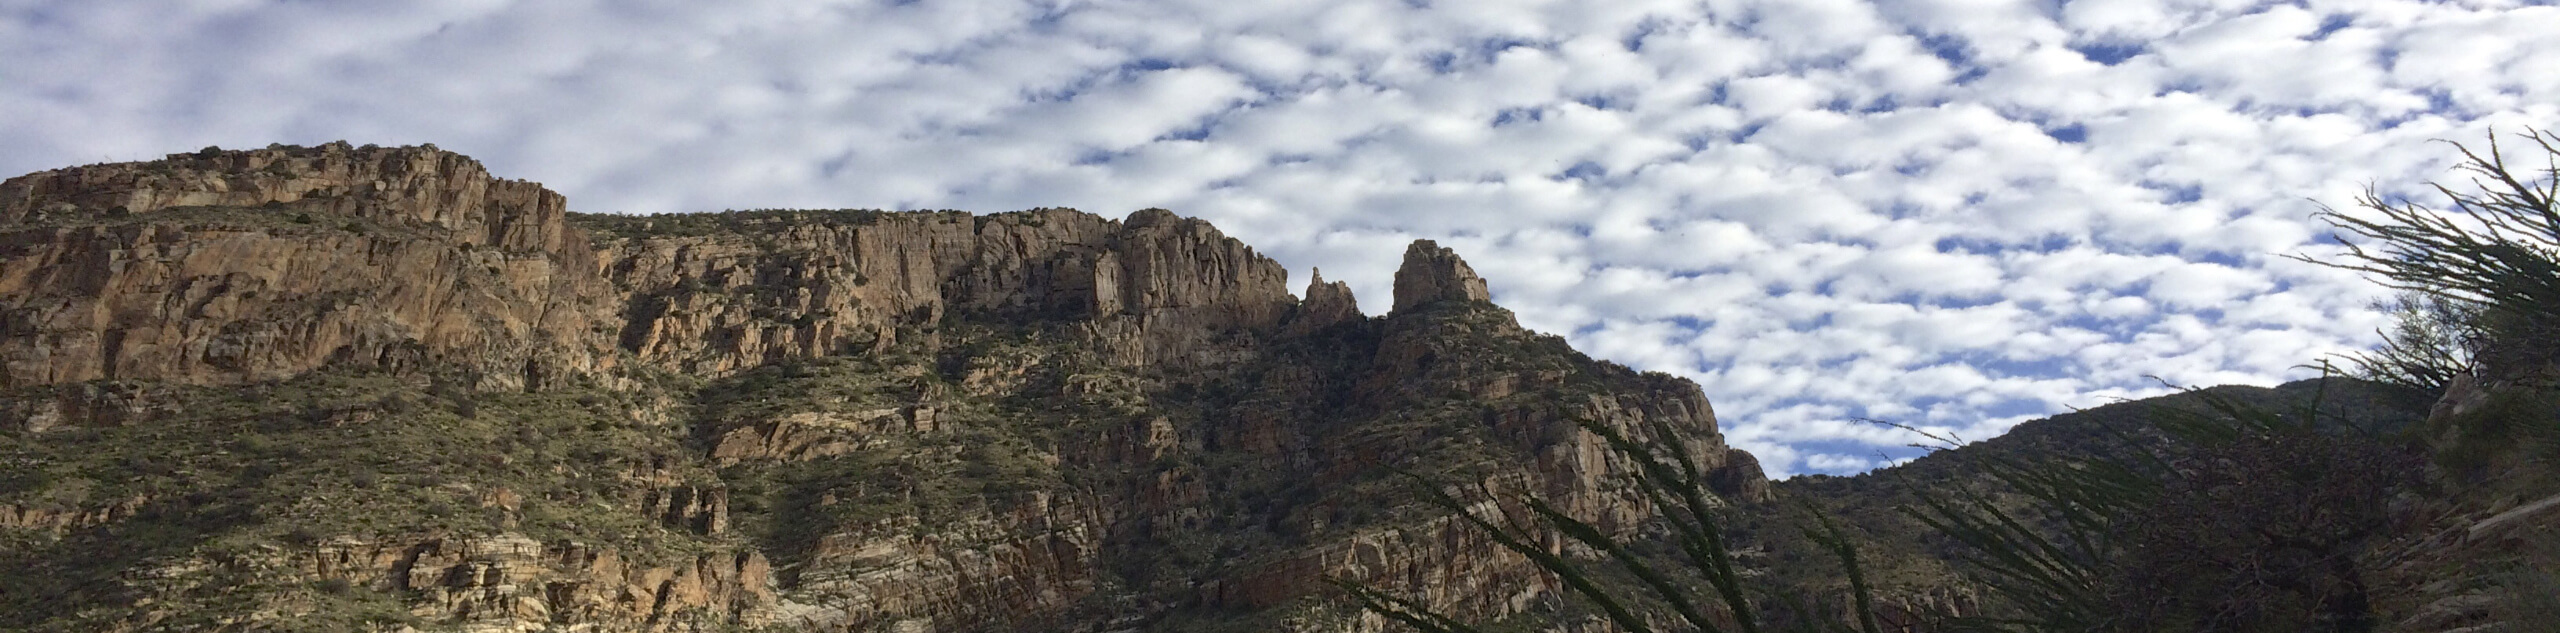 Finger Rock Trail to Pima Canyon Trail